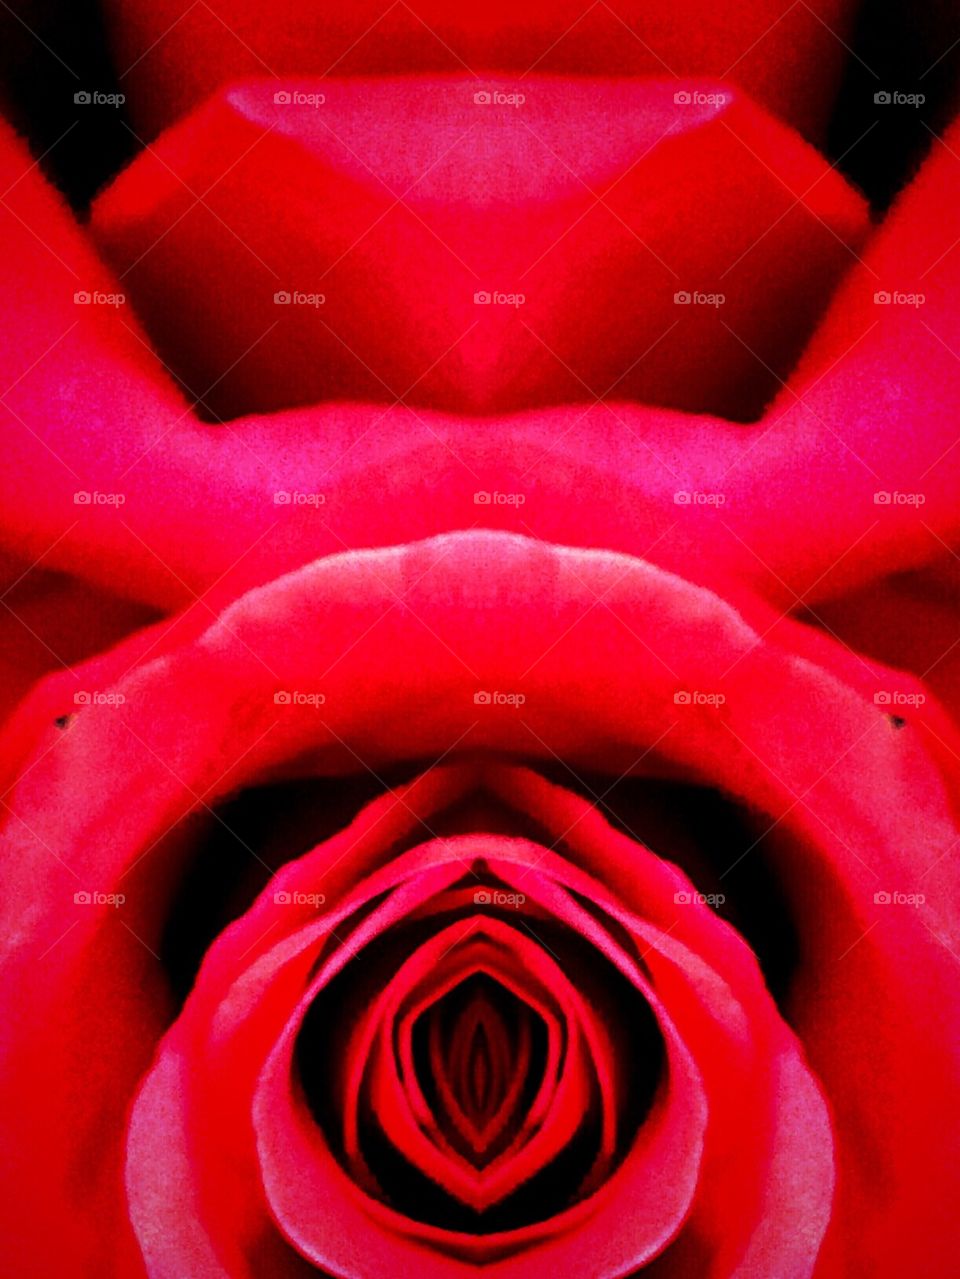 Profound rose